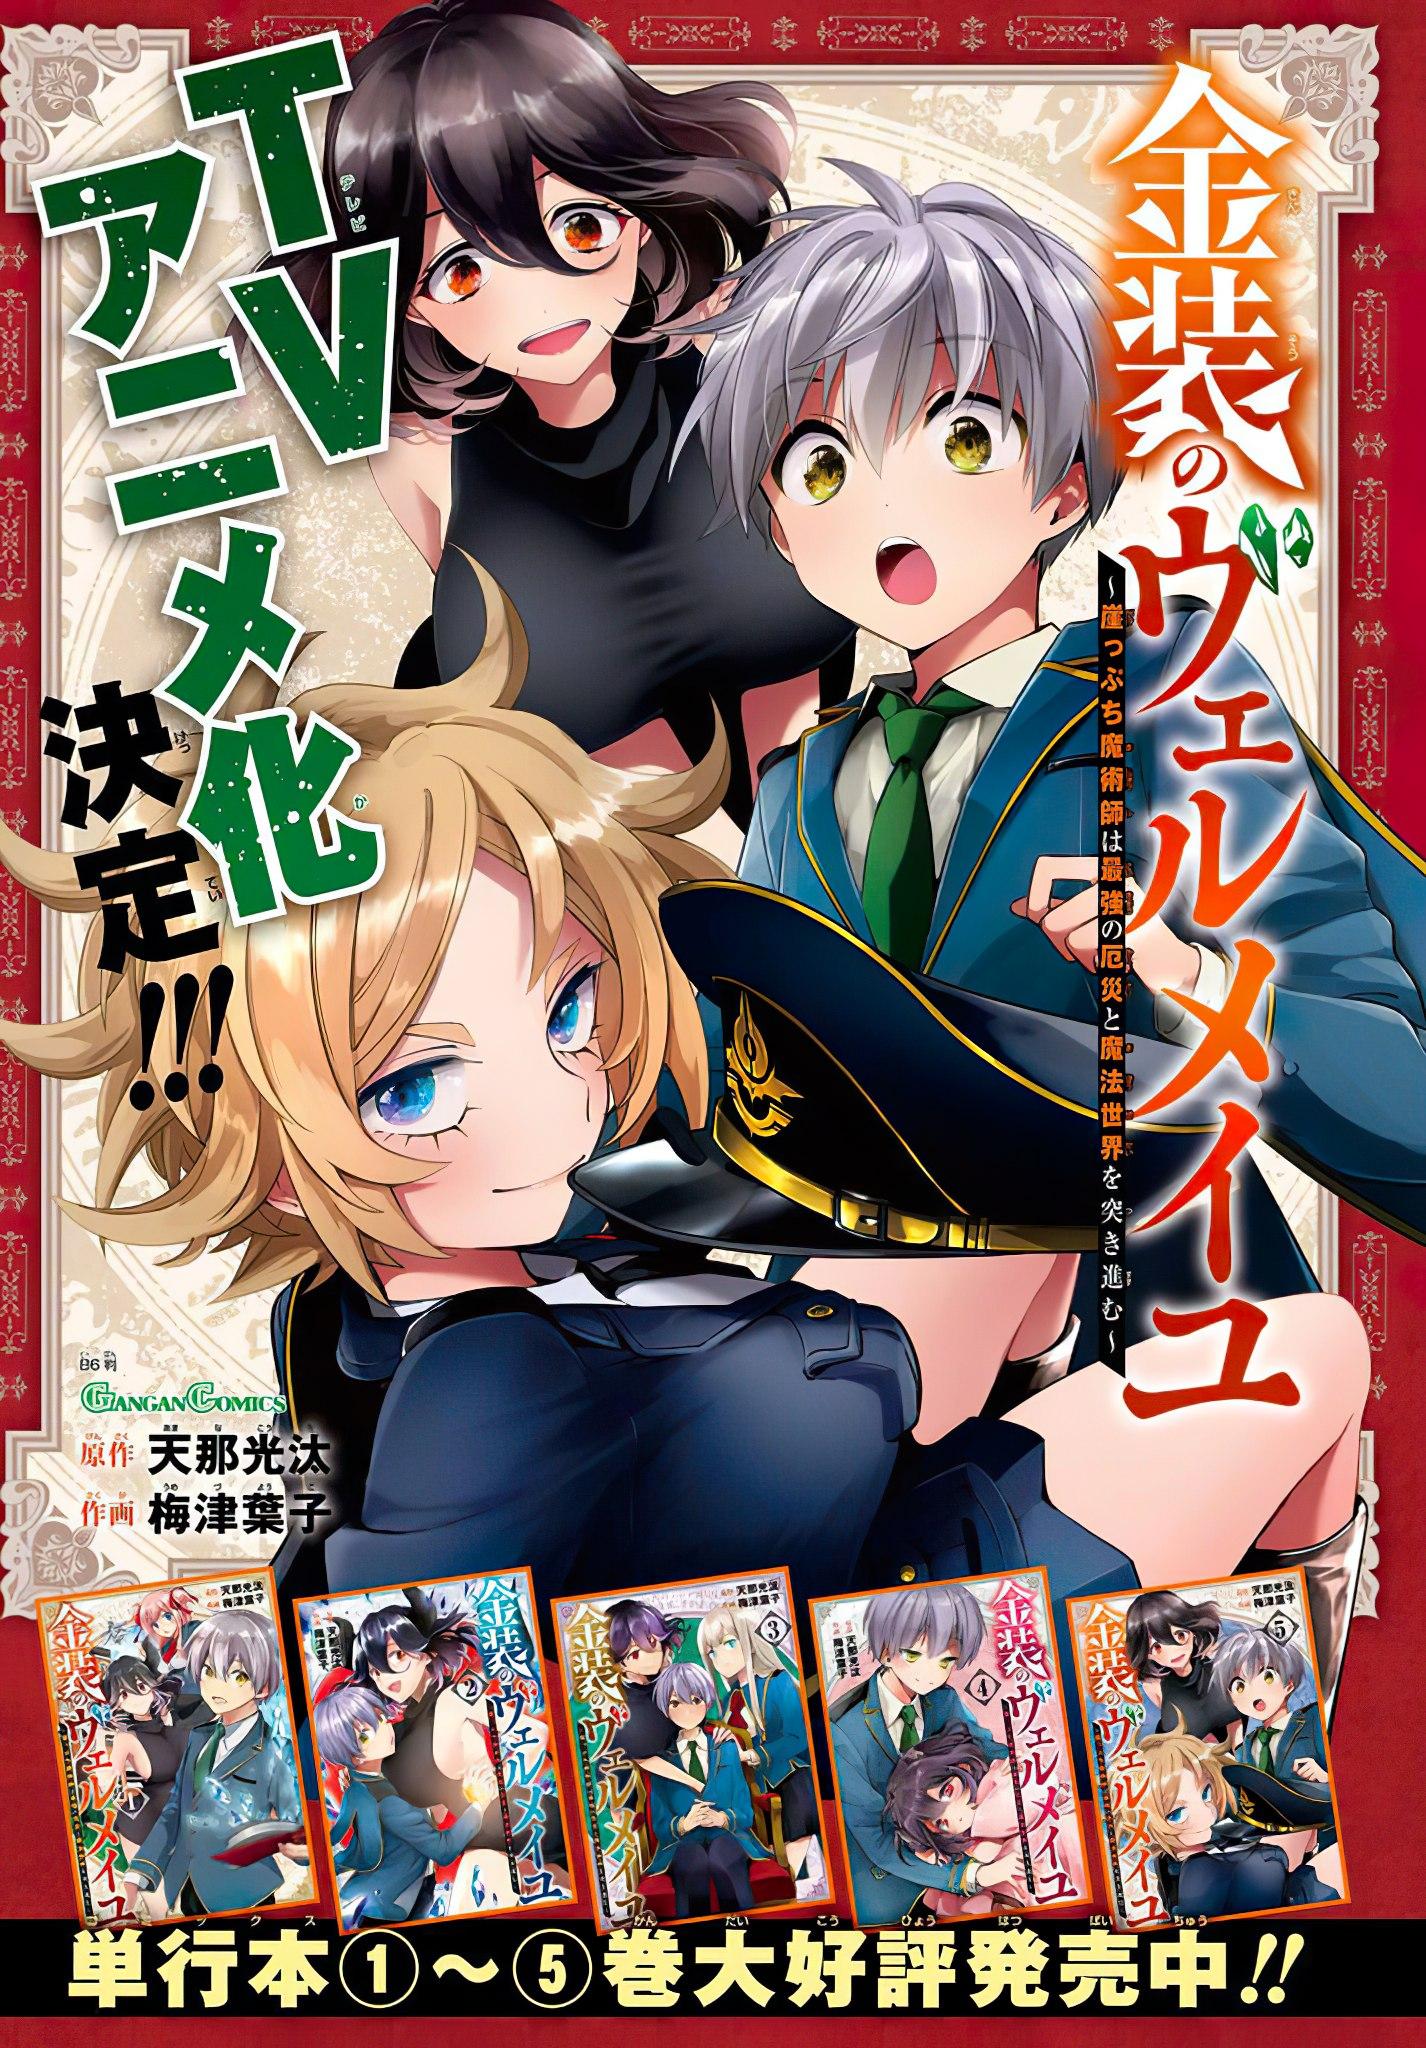 Ecchi Fantasy Anime Kinsou no Vermeil Works its Magic with New